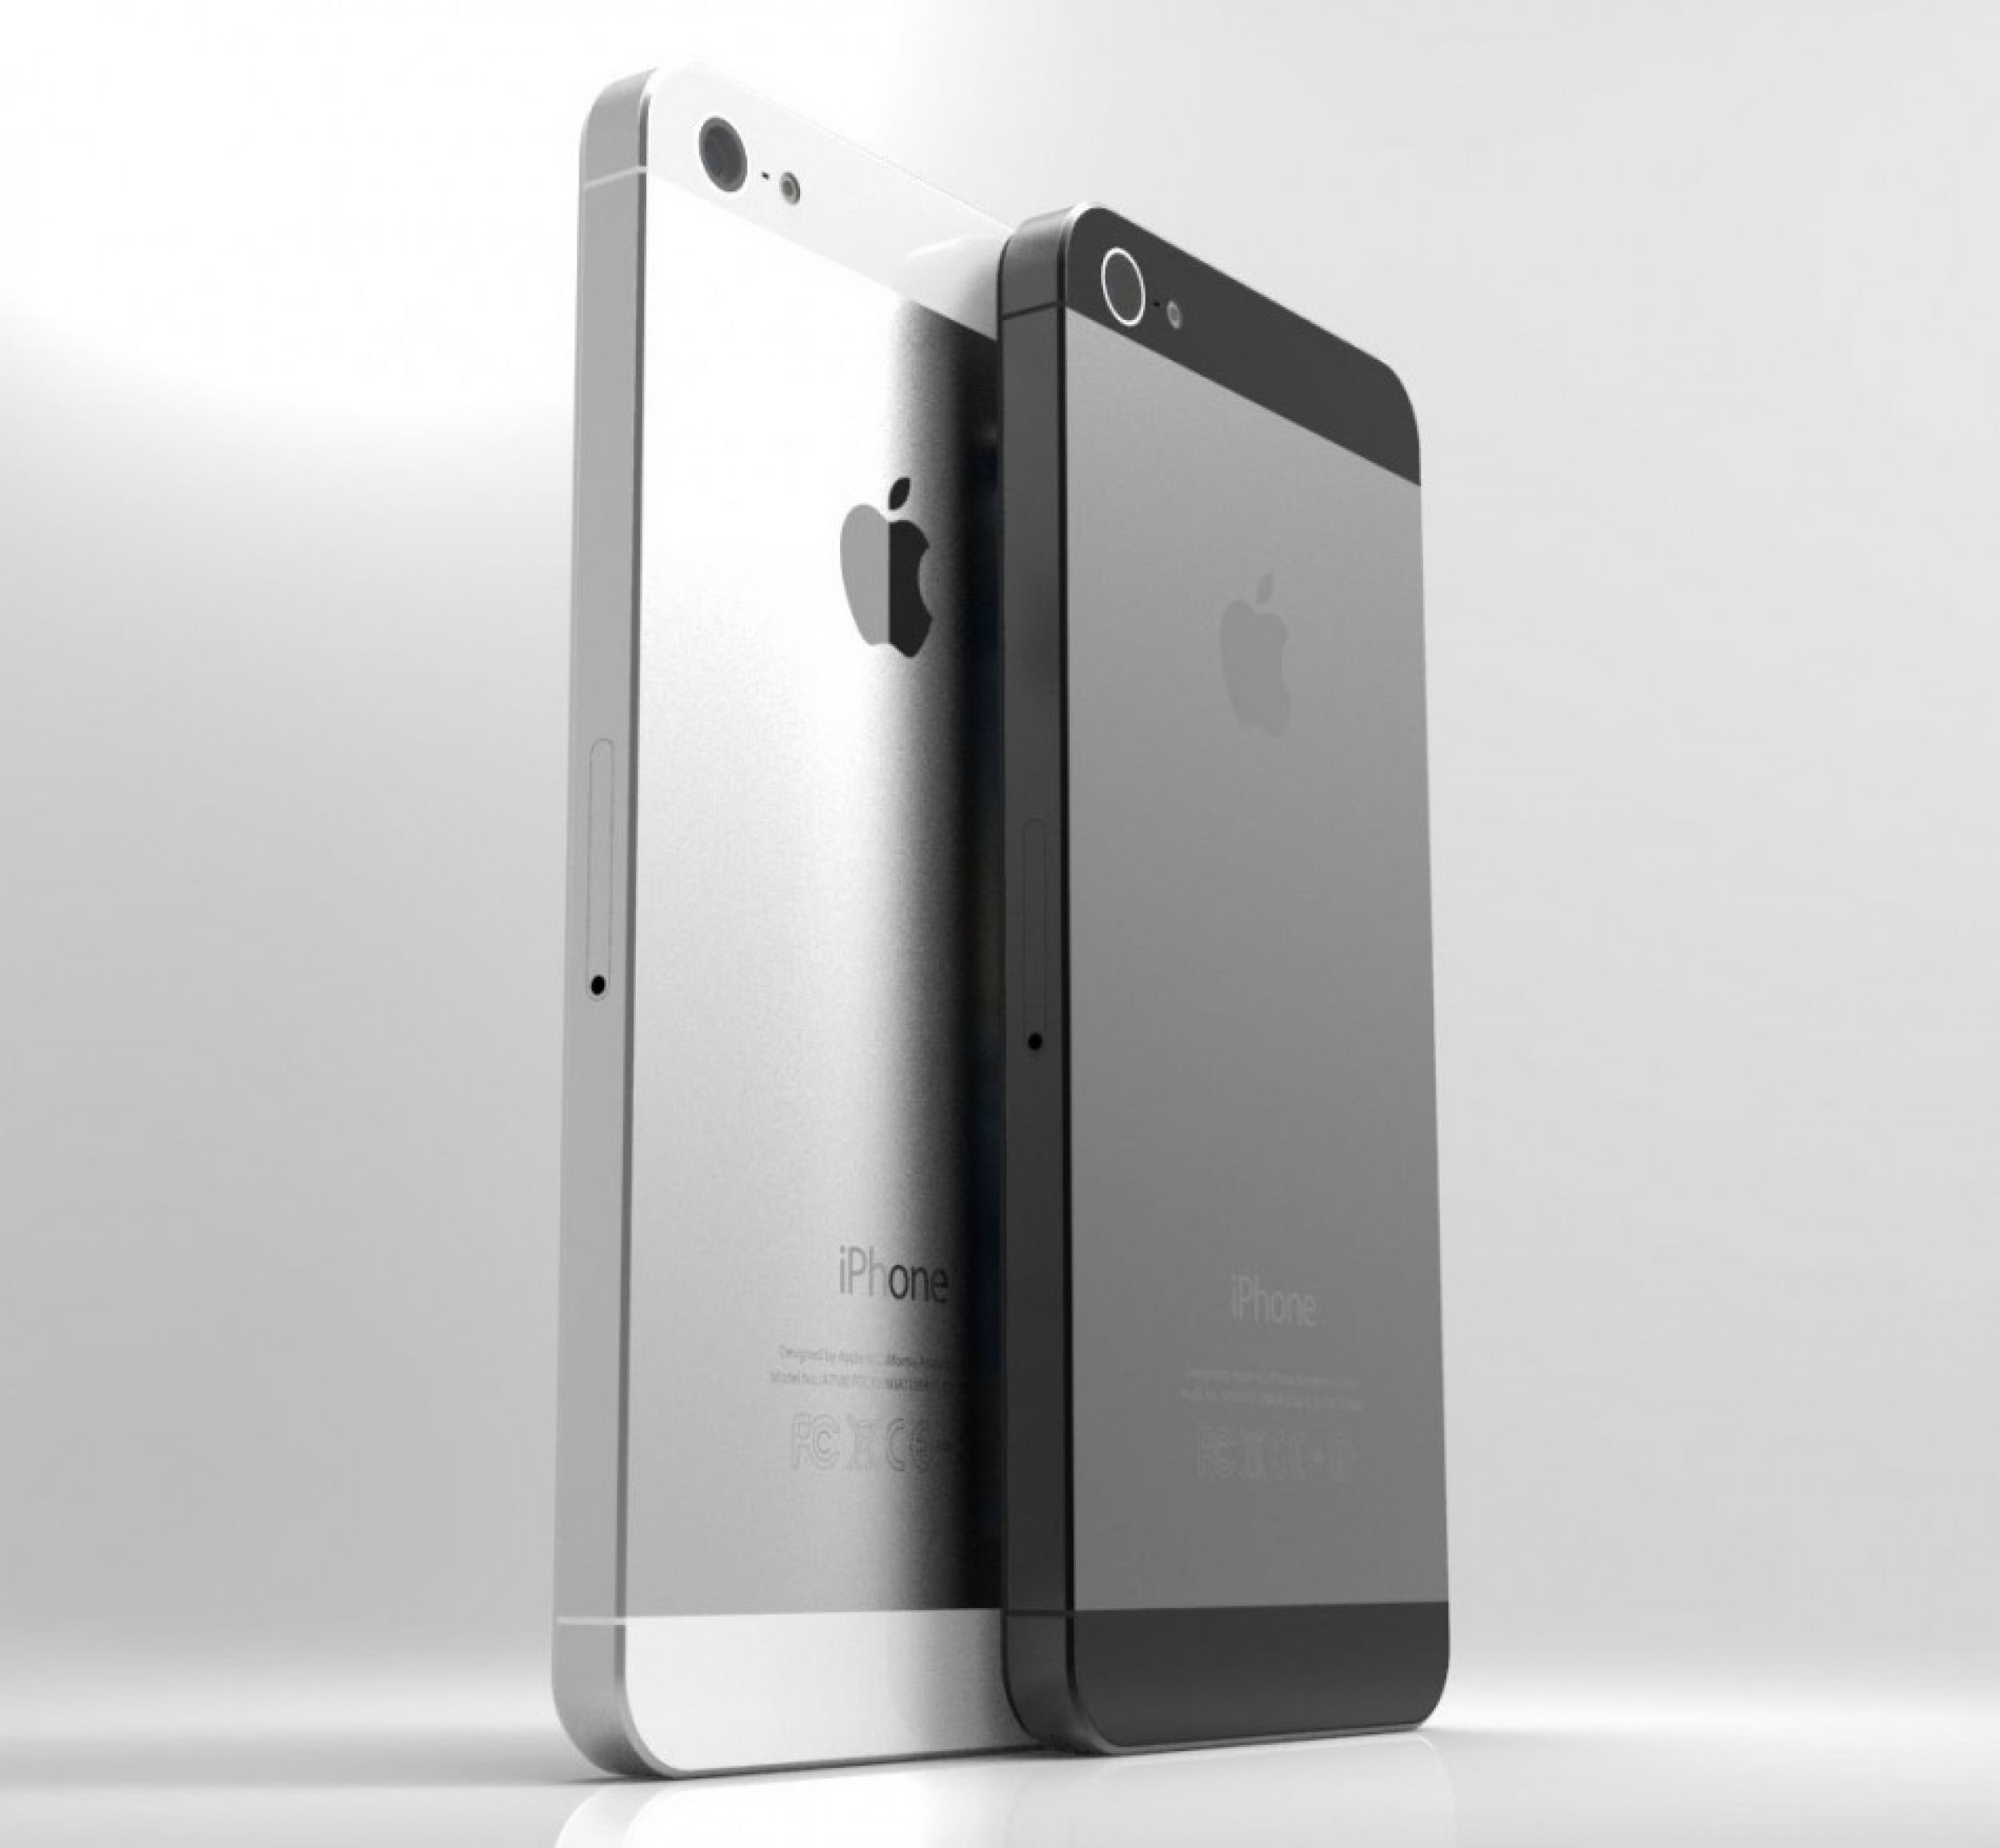 Apple iPhone 5 Rumors 800 Starting Price Fat Chance 